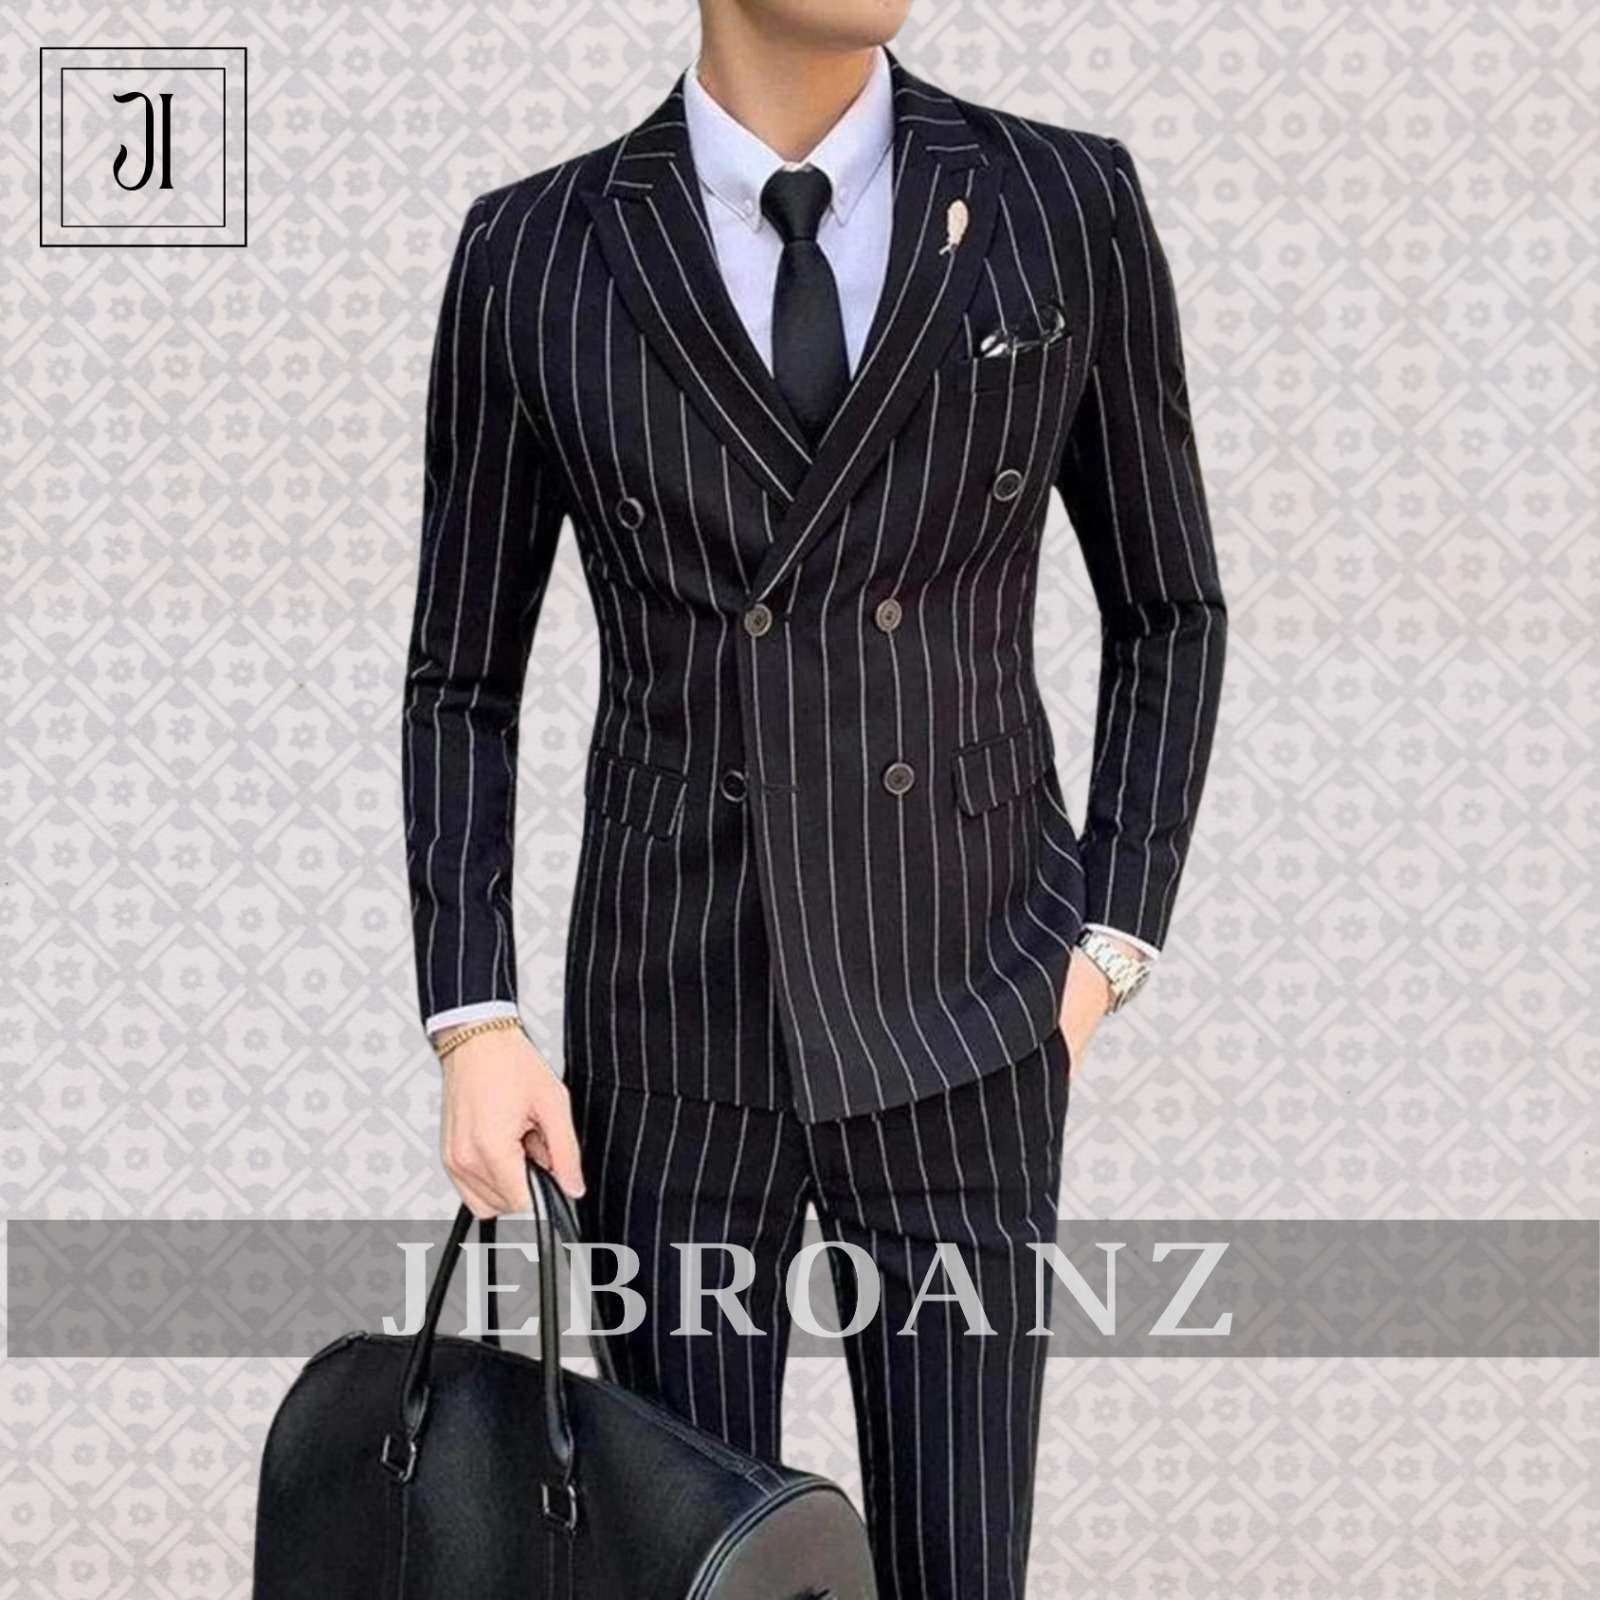 New Bespoke Black Lining Suit For men , Men Suits 3 piece, Groom Wedding Suits